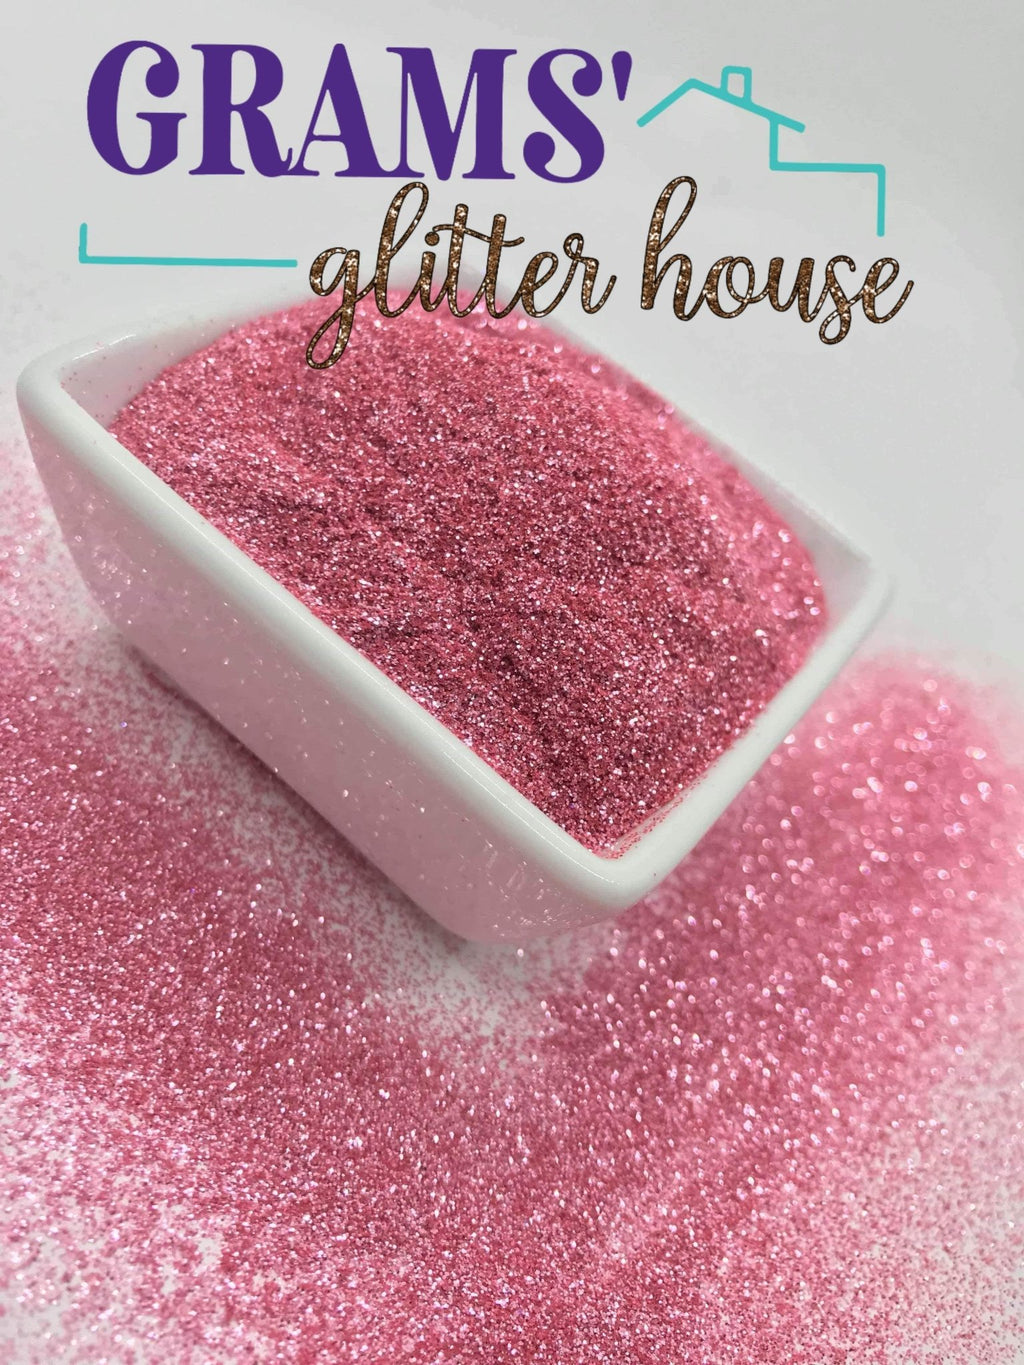 2 oz Grams' Glitter House Pink Taffy Polyester Glitter